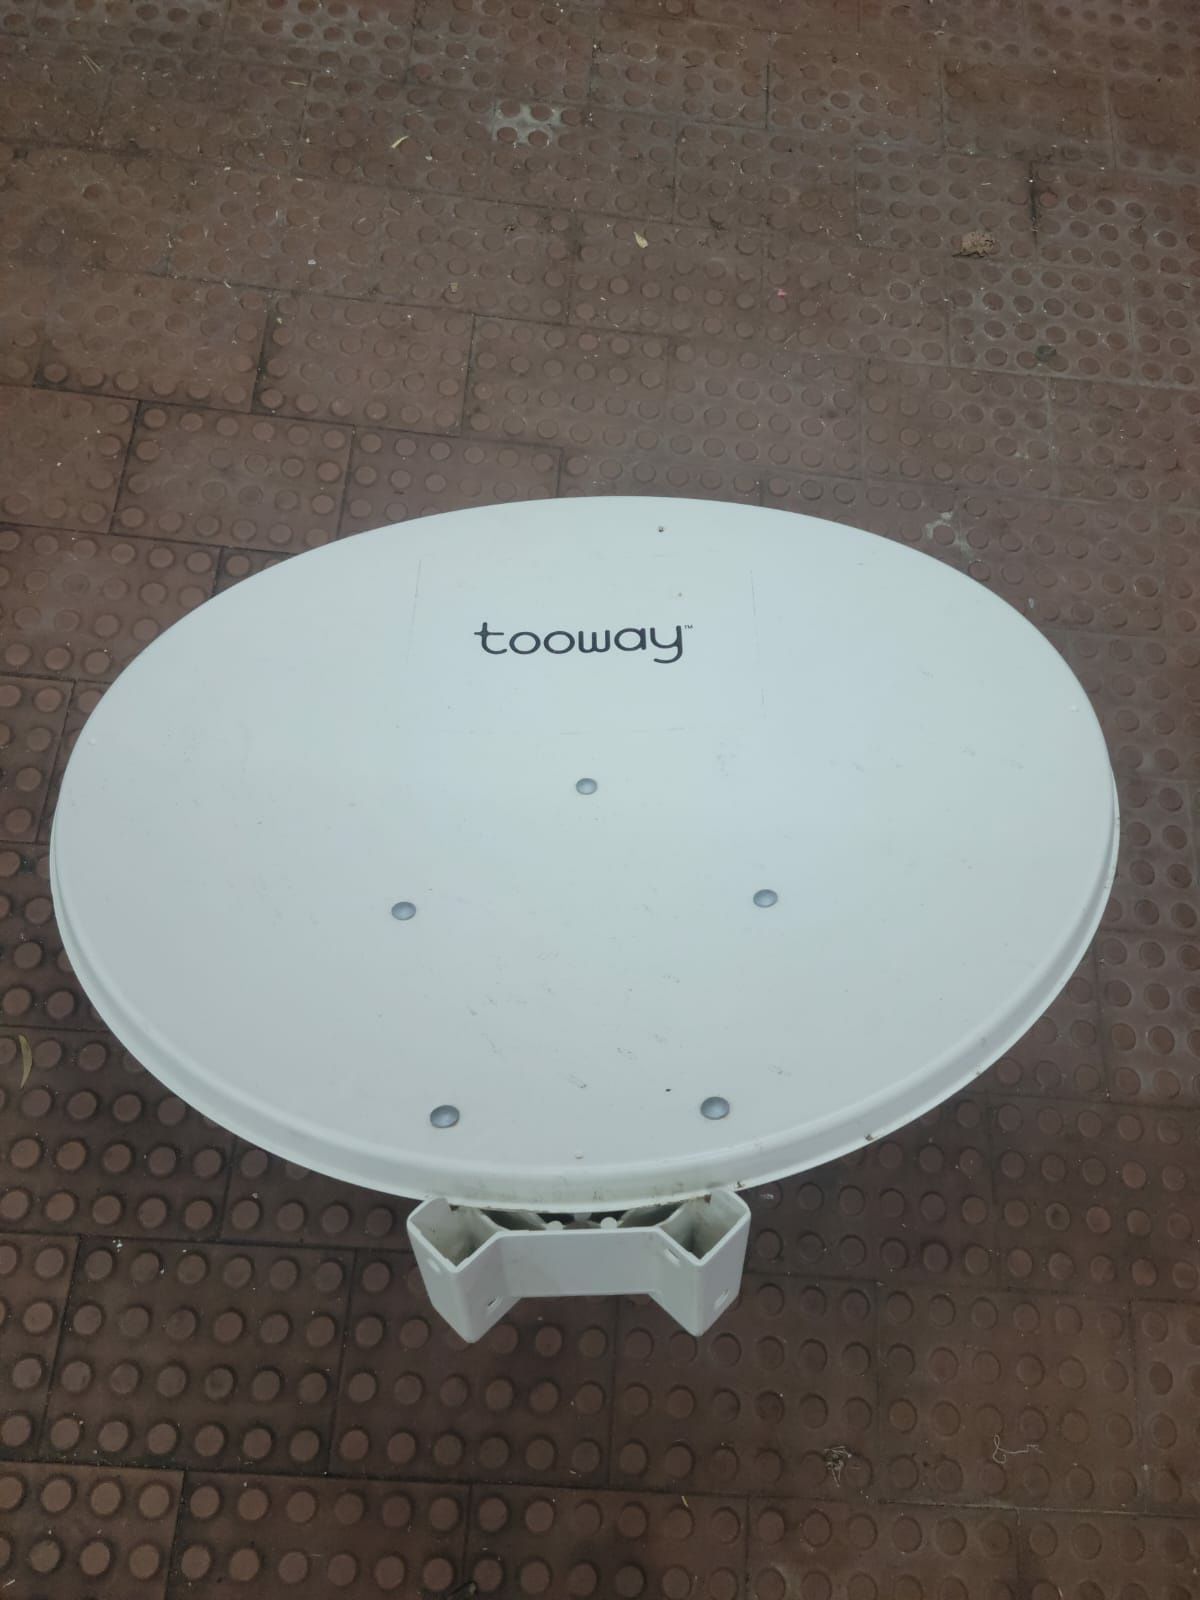 SkyDSL Viasat tooway internet por satélite com router